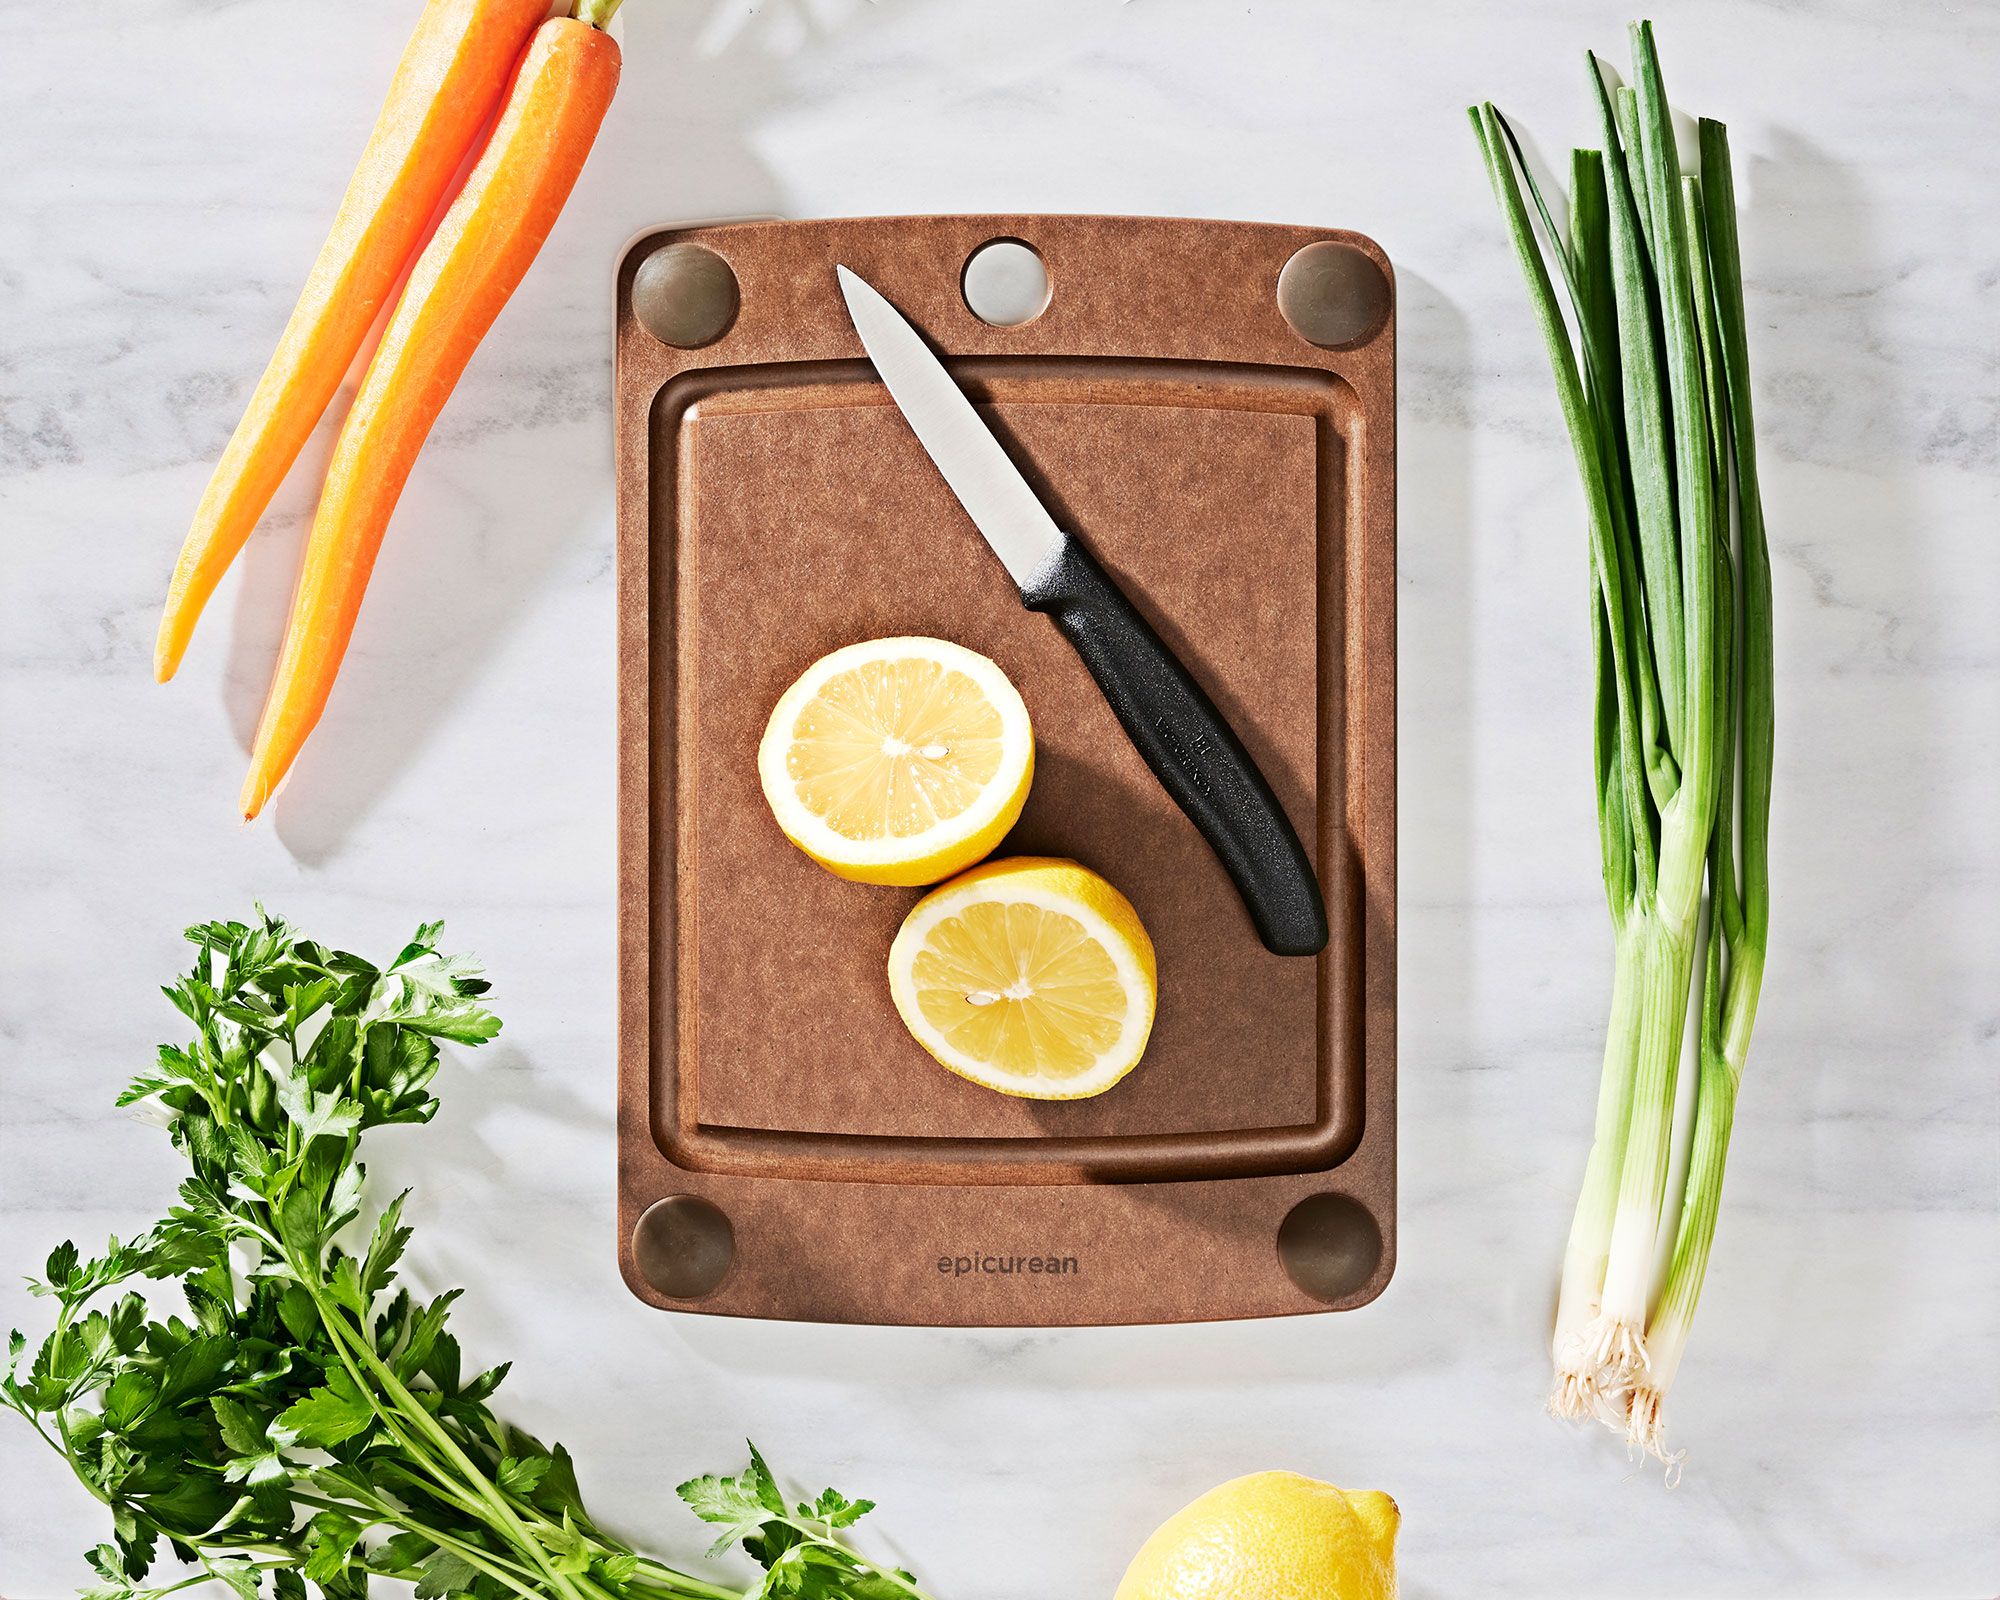 Epicurean All in One Wood Fiber Cutting Board – The Kitchen